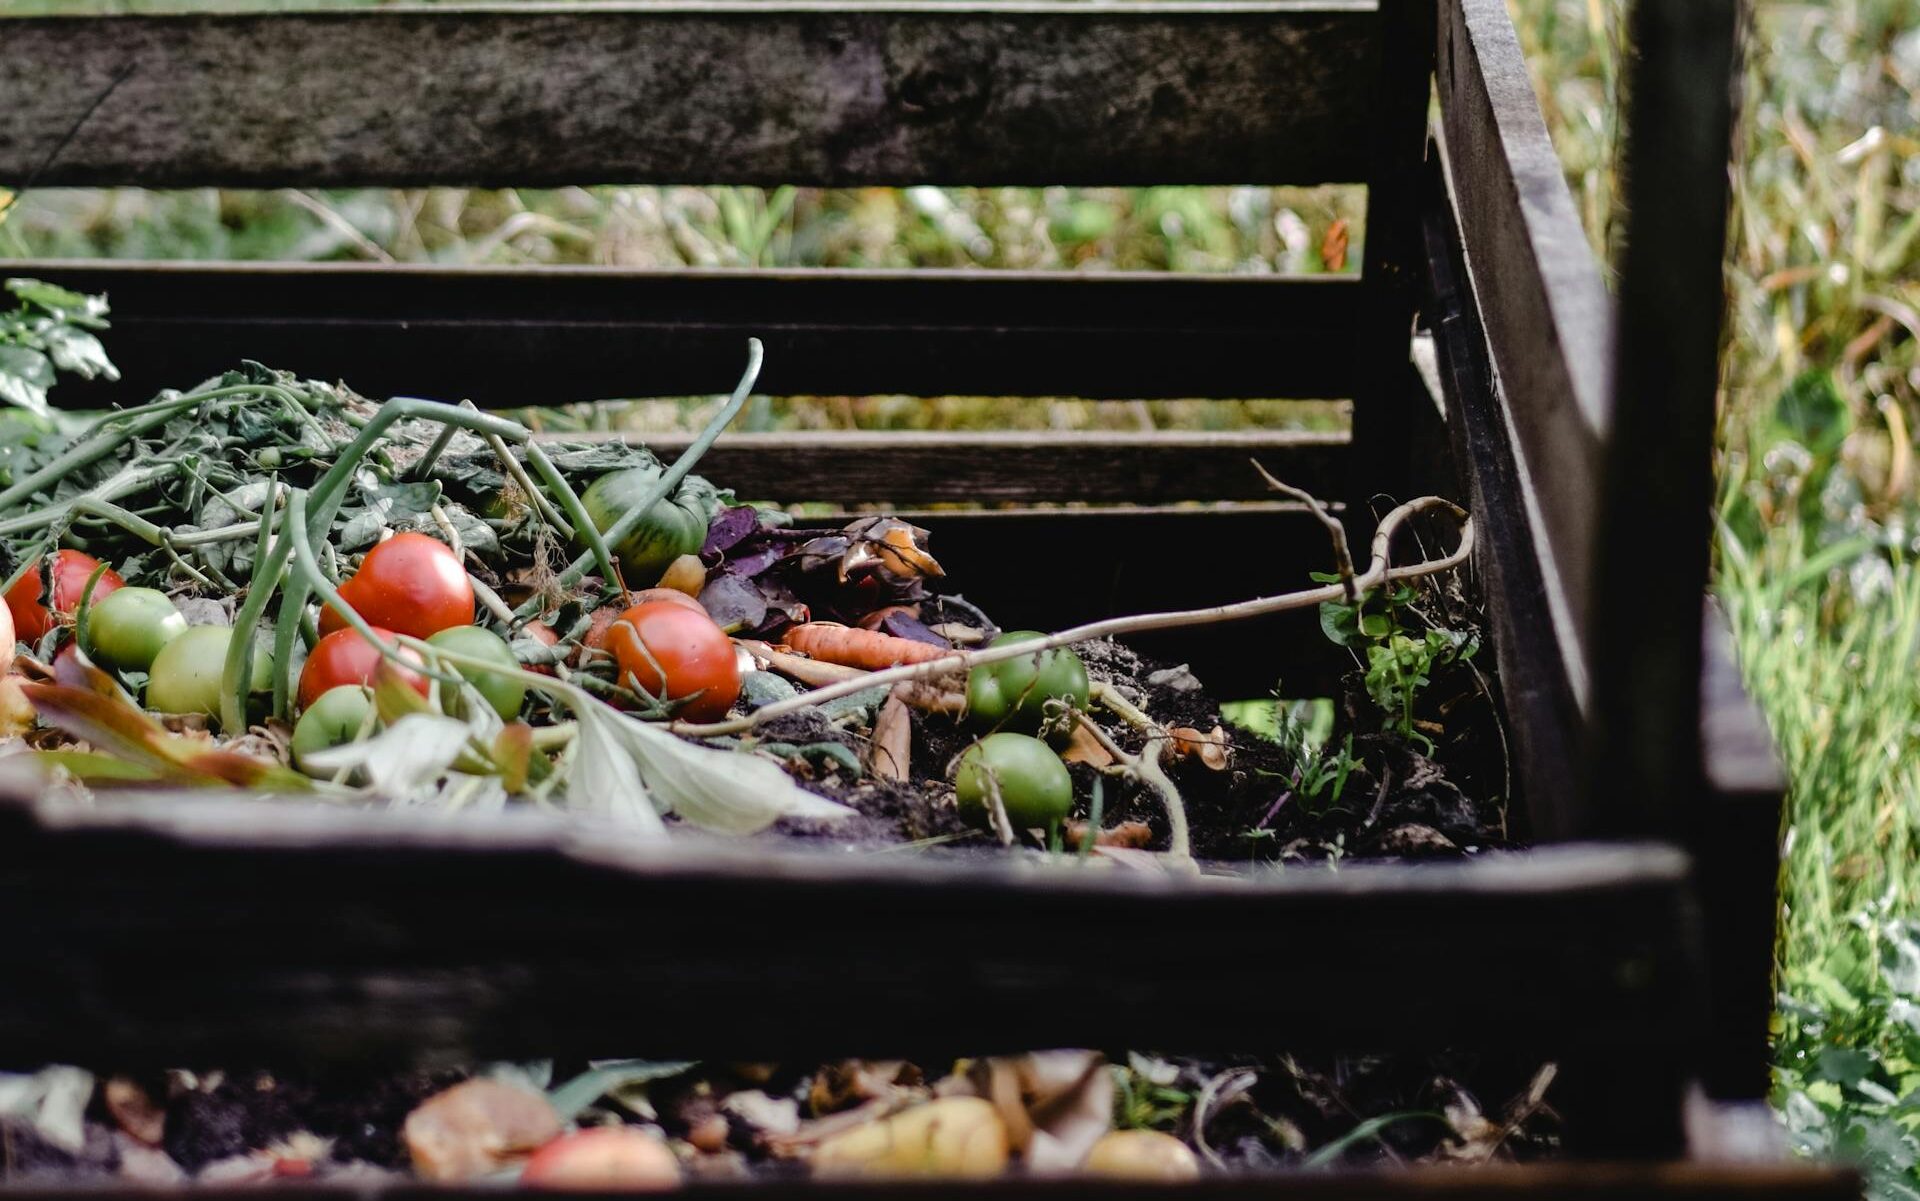 backyard compost bin is one of the best urban homesteading ideas